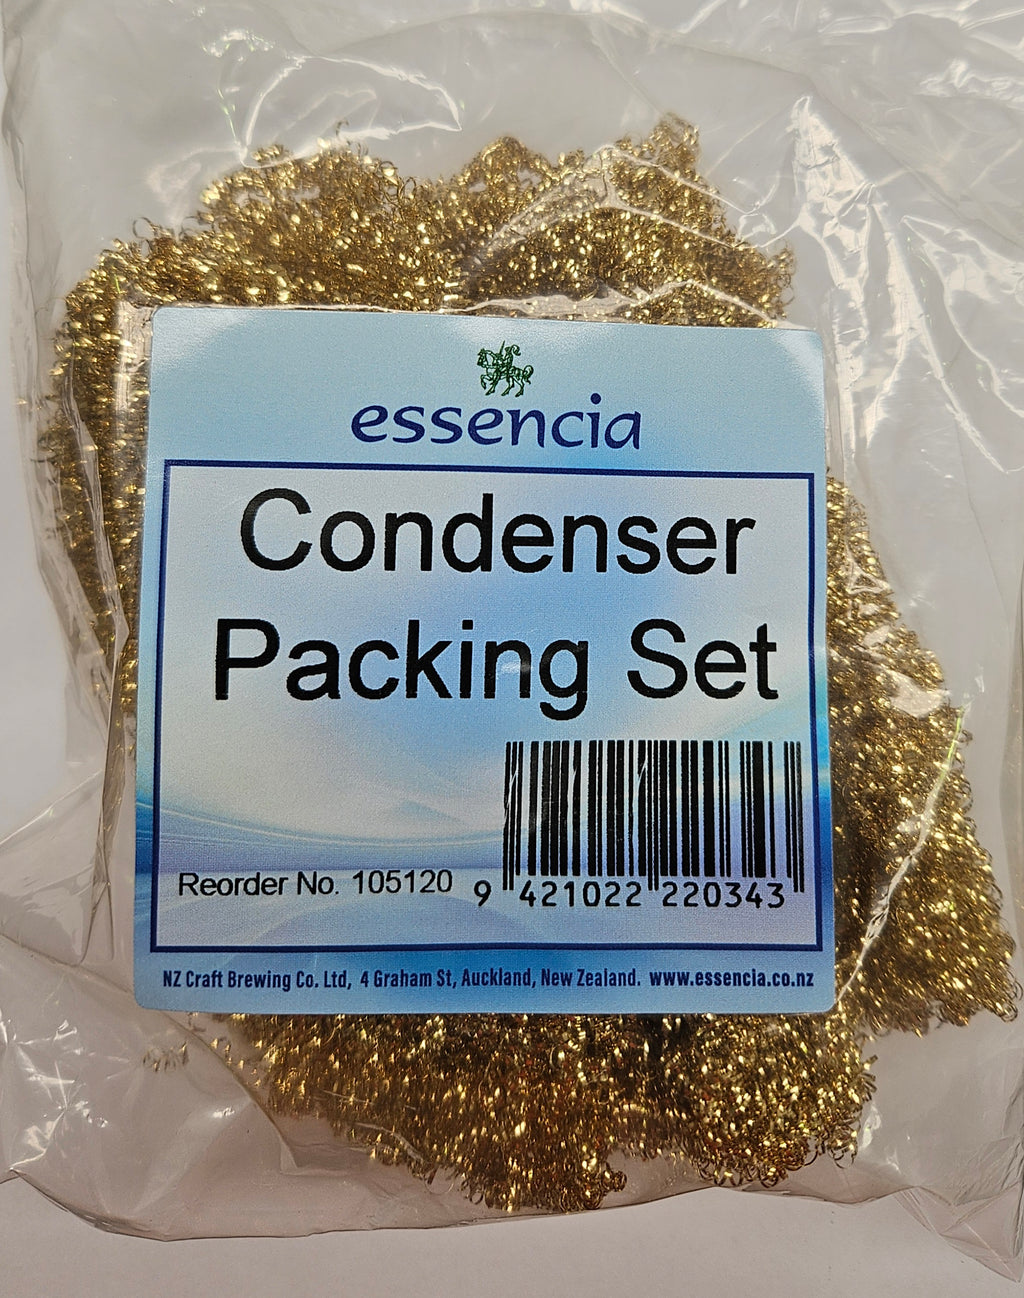 Condenser Packing Set